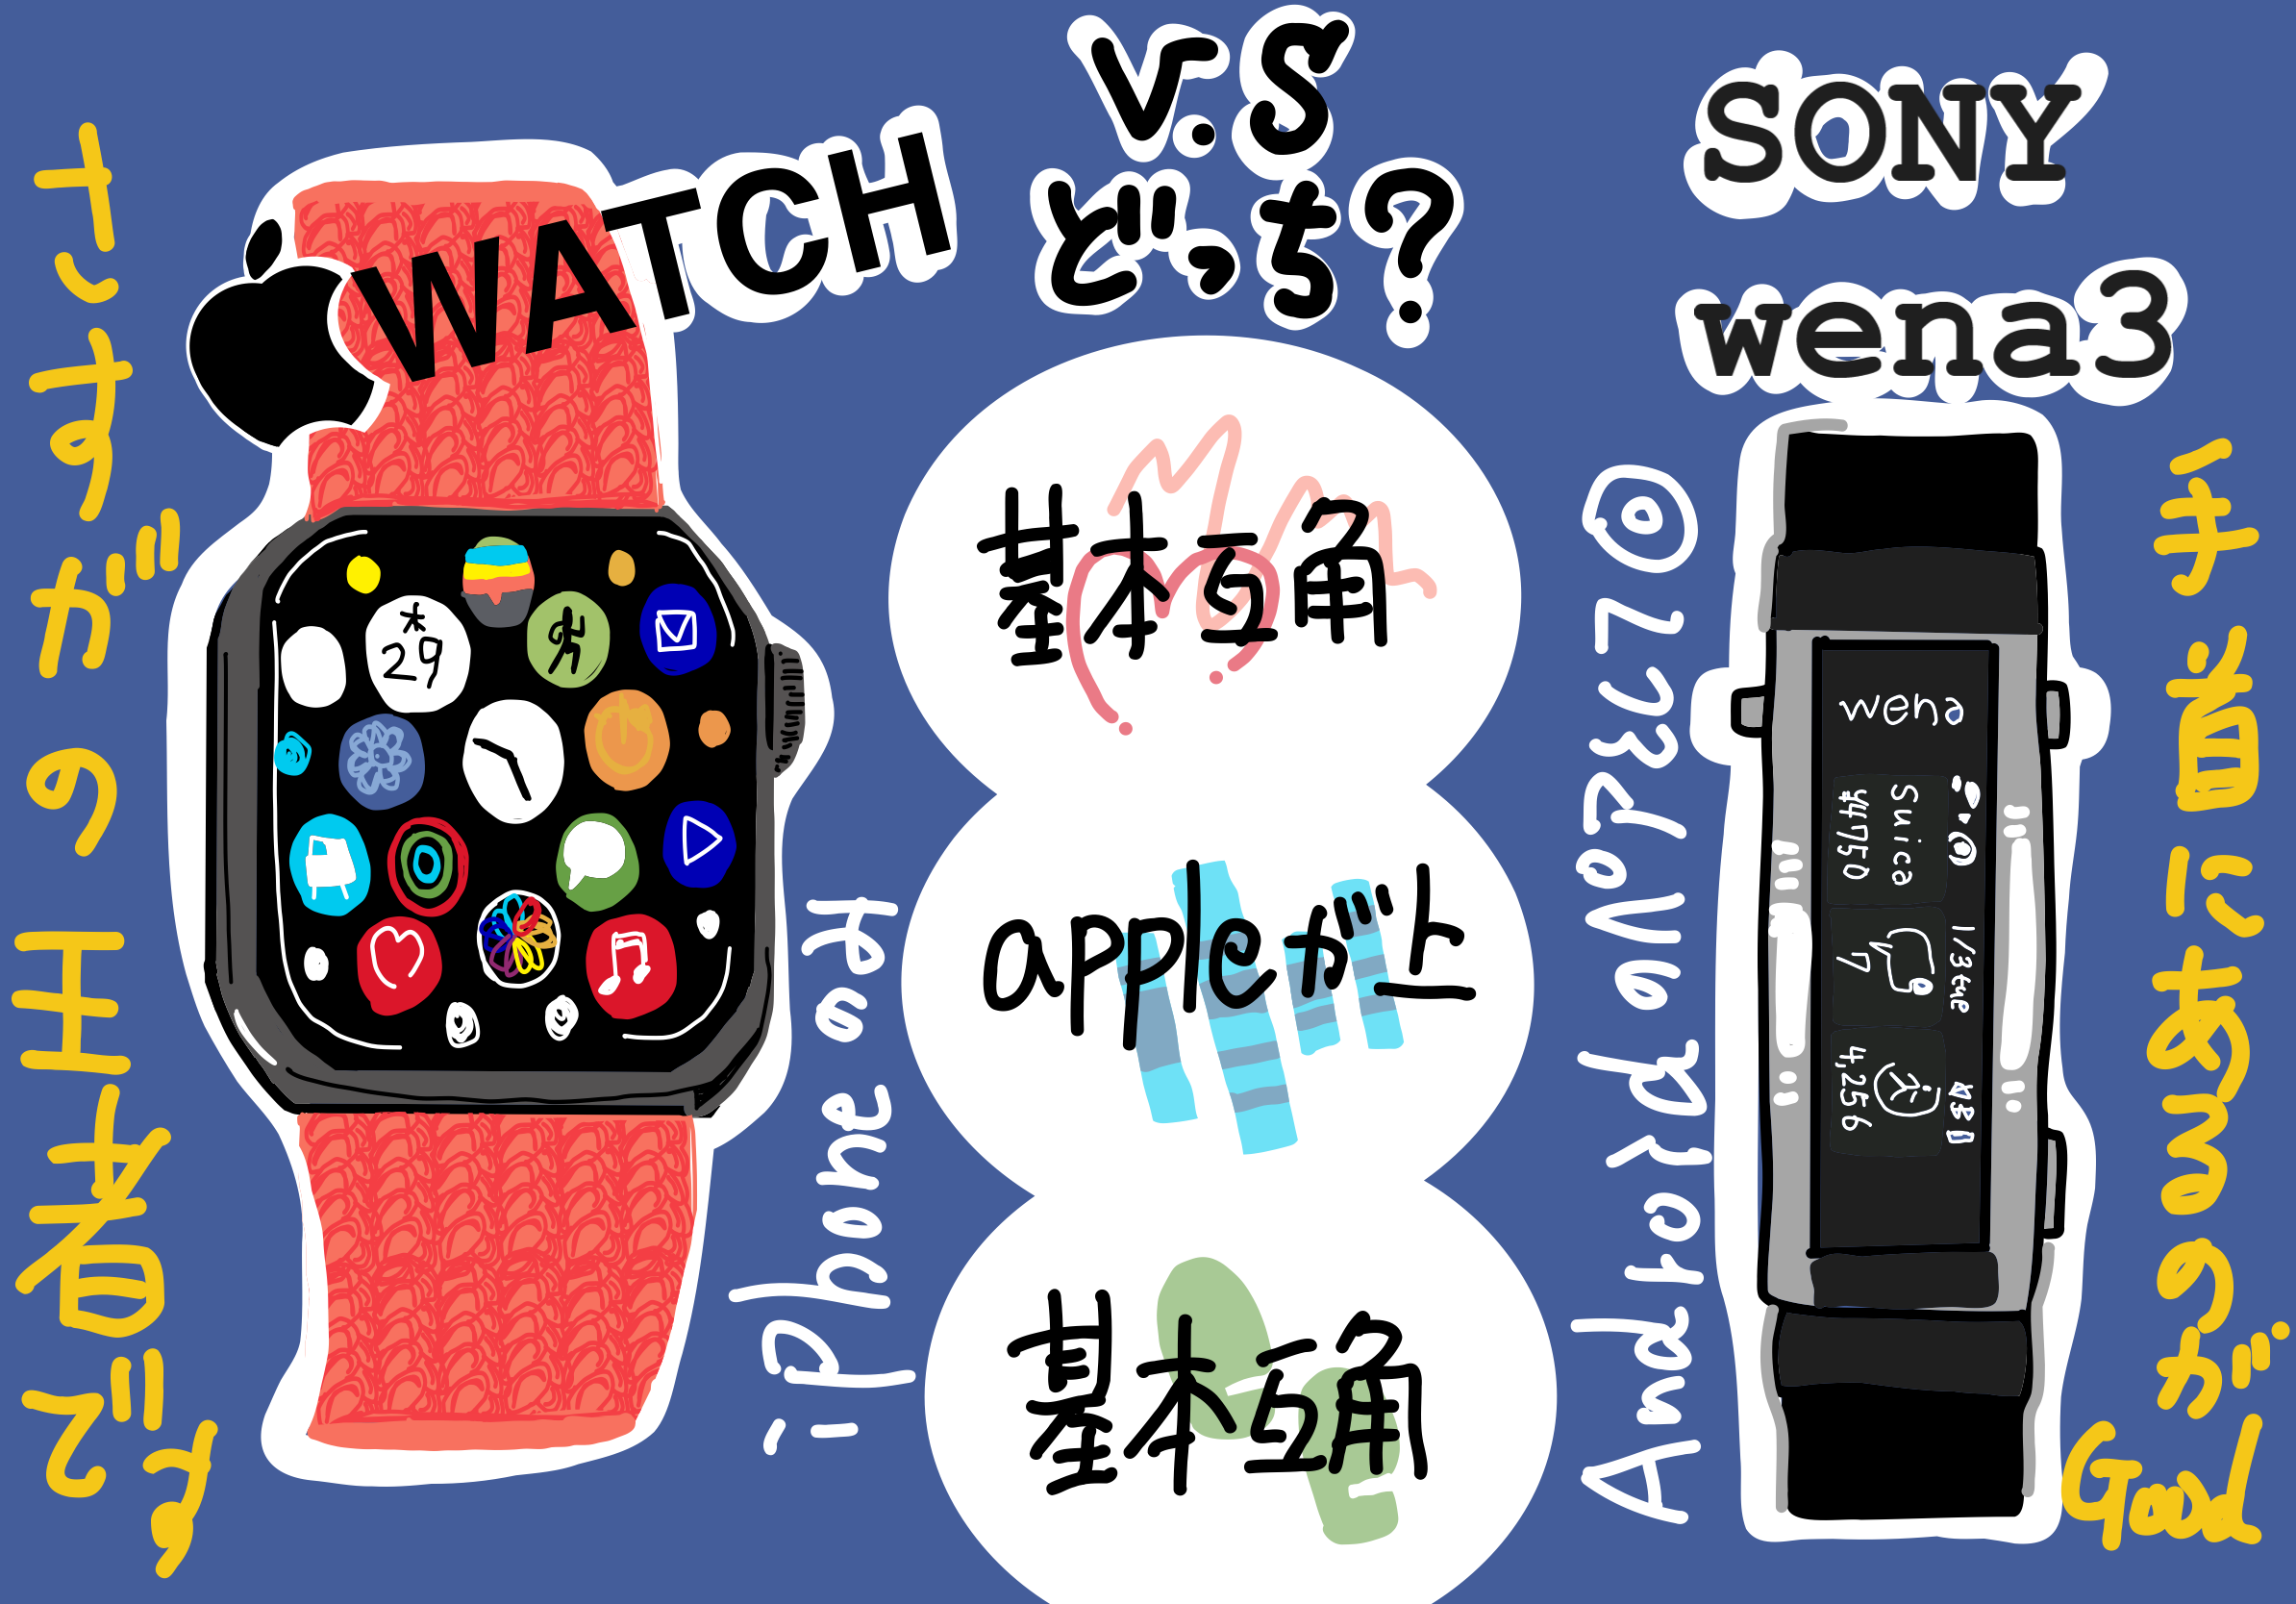 SONY wena3 が apple watch に優っている点 劣っている点(2022/11/23 一部の誤情報訂正しました)